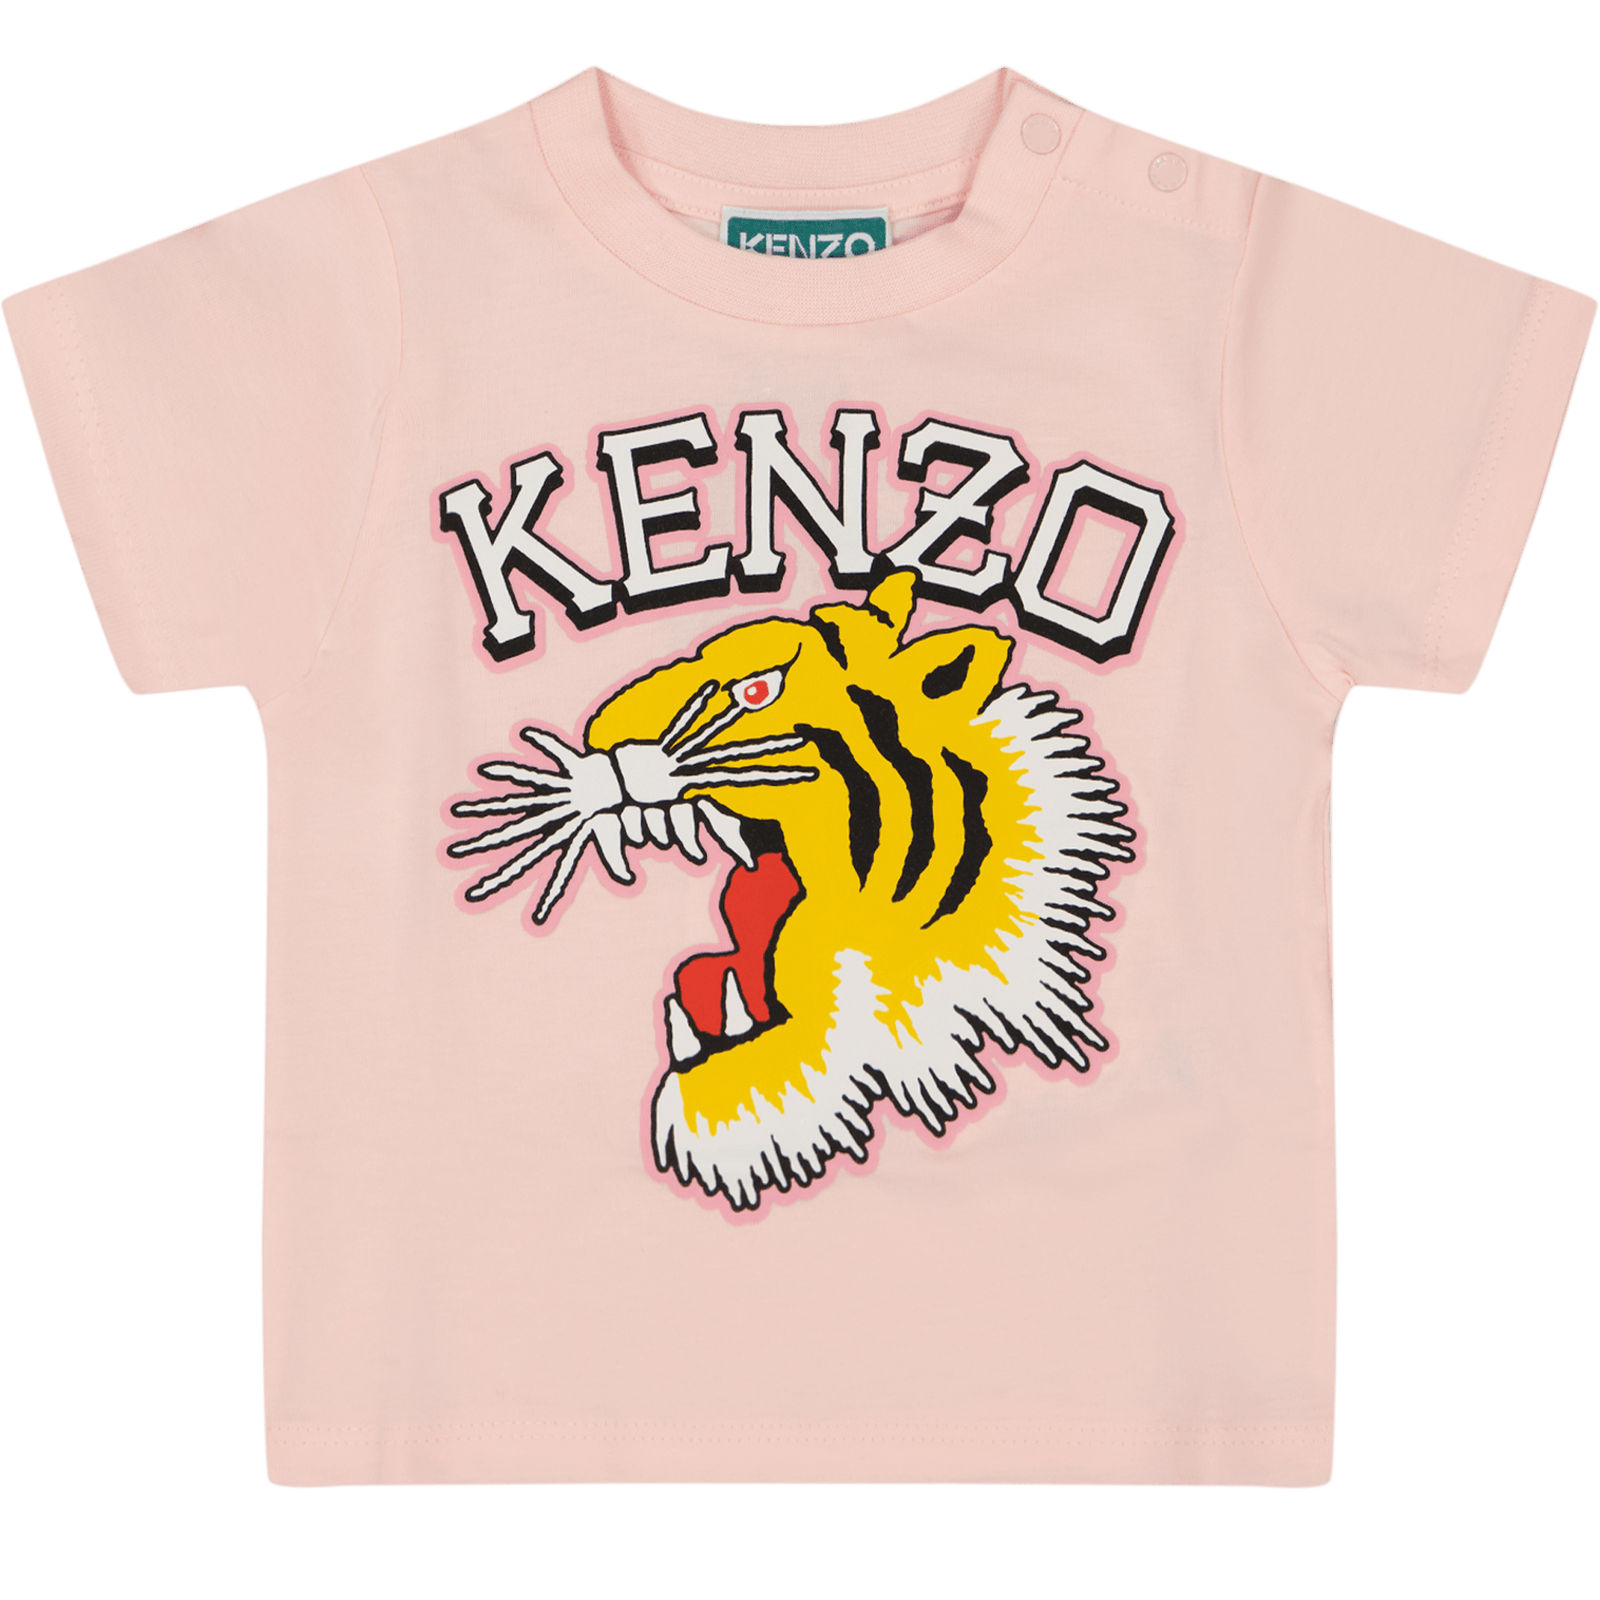 Kenzo kids Baby Meisjes T-Shirt Licht Roze 6 mnd